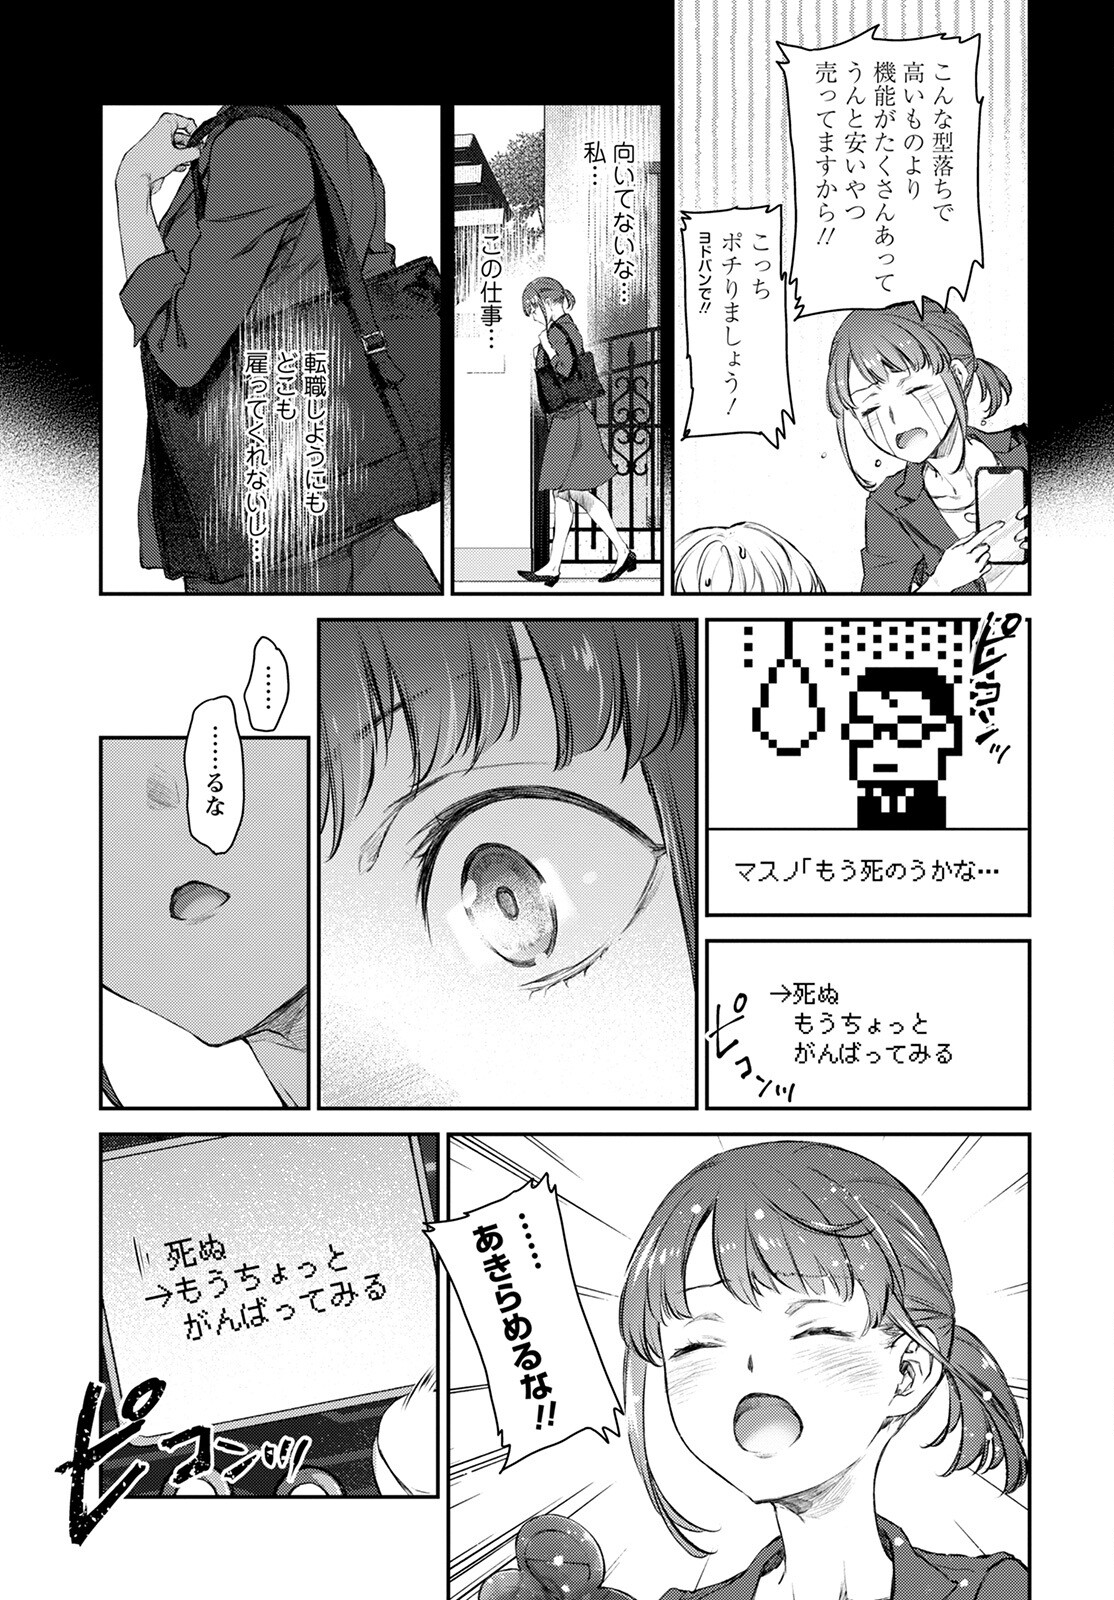 Uchi no Maid ga Uzasugiru! - Chapter 54 - Page 7